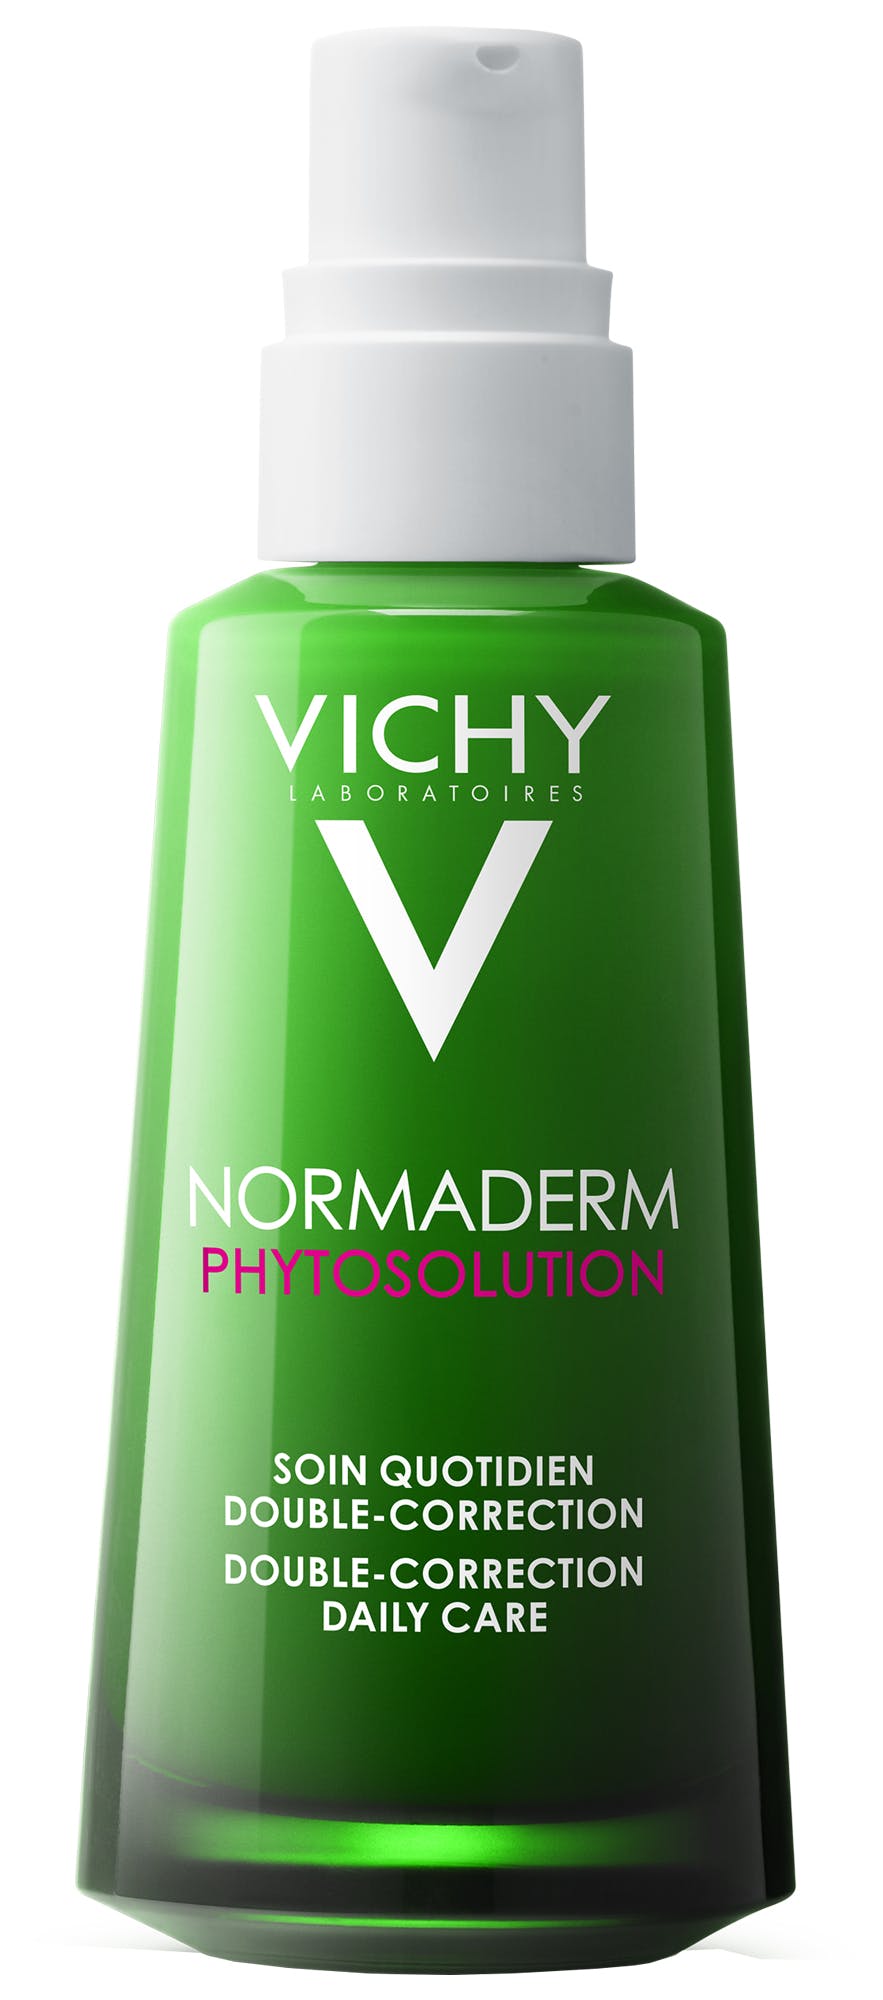 Vichy Normaderm Phytosolution Double Correction Daily Care Moisturiser Щоденний флюїд подвійної дії для жирної, схильної до недоліків шкіри 